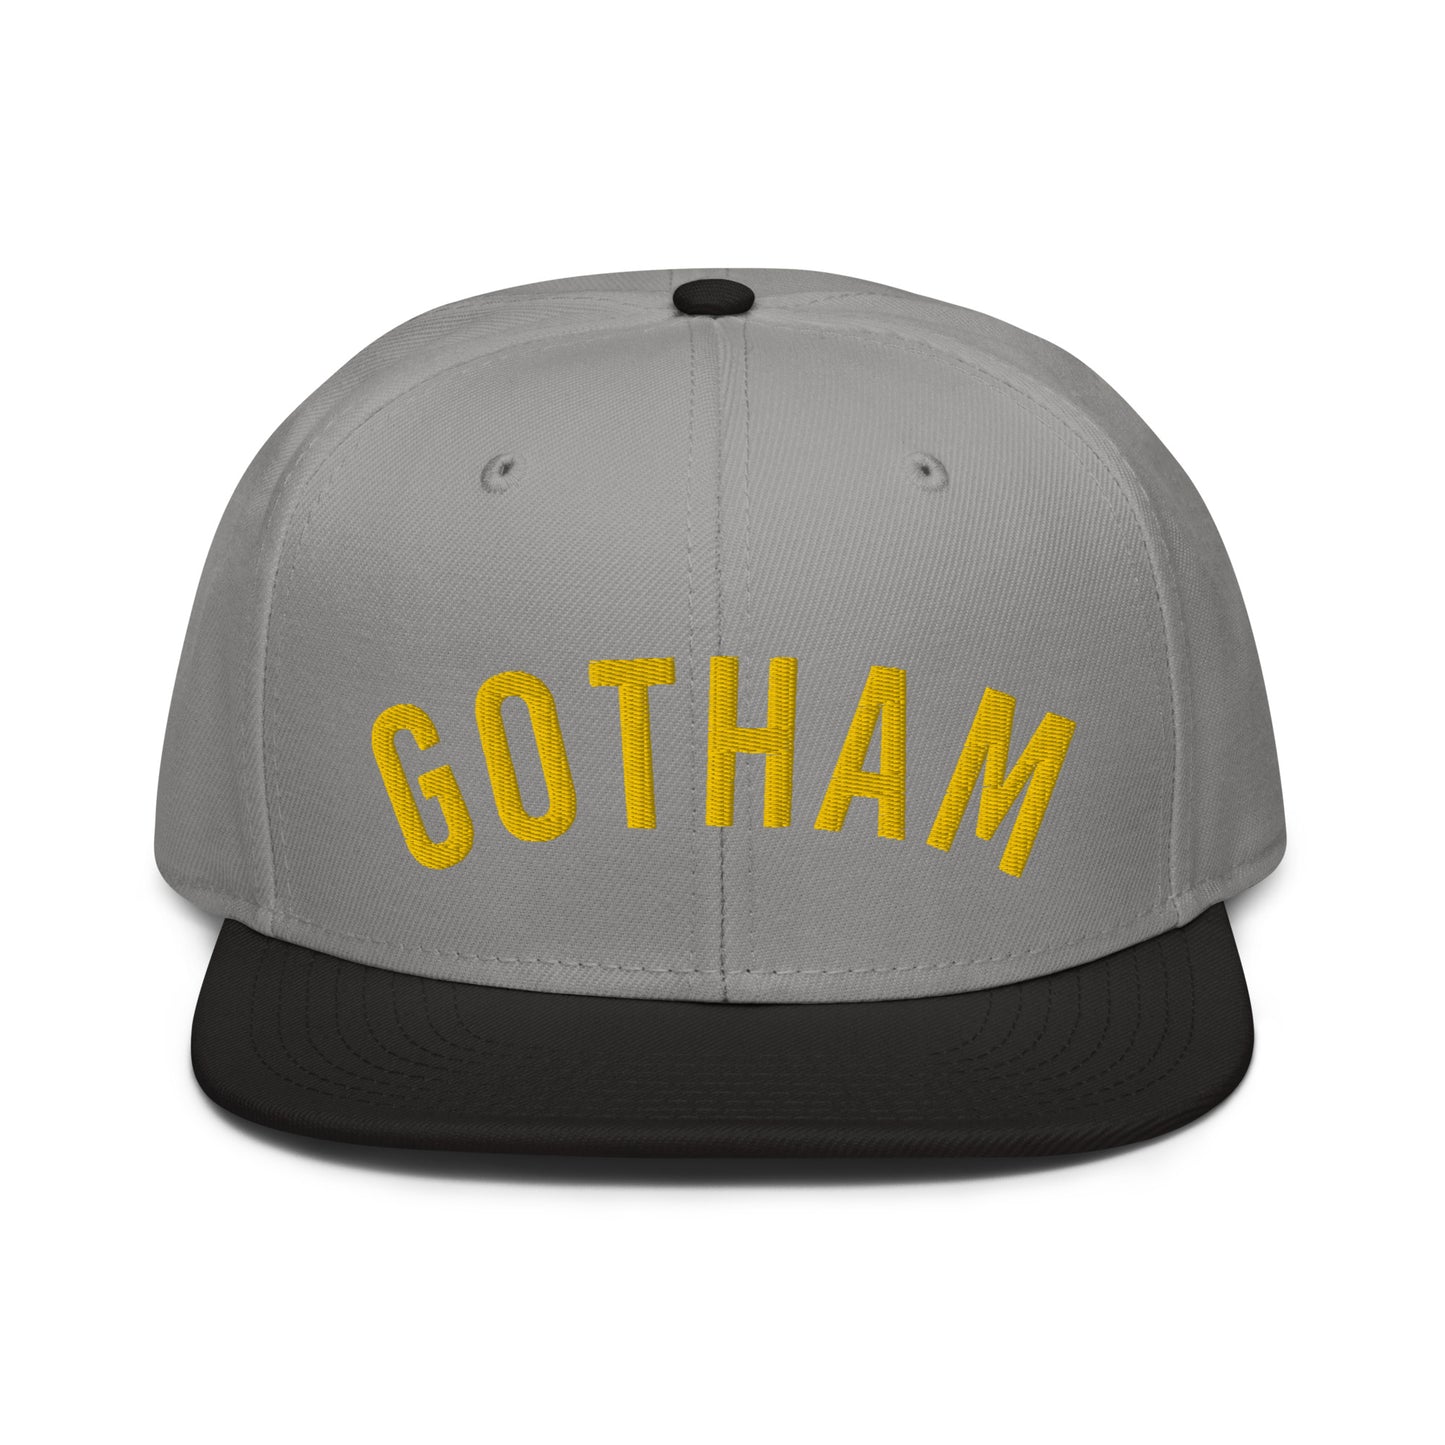 Gotham Home Team snapback hat